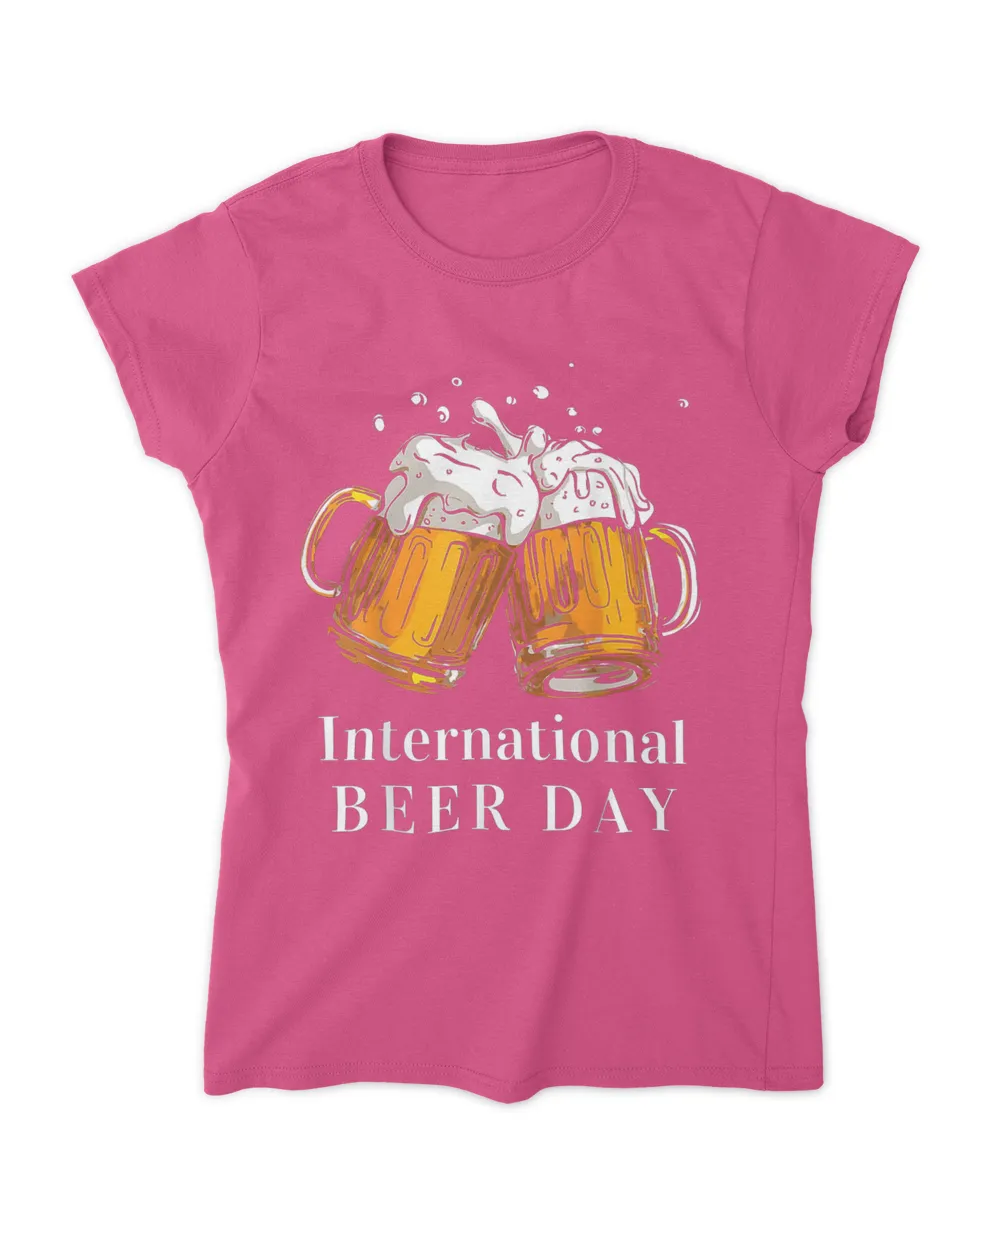 Cheers International Beer Day T-Shirt